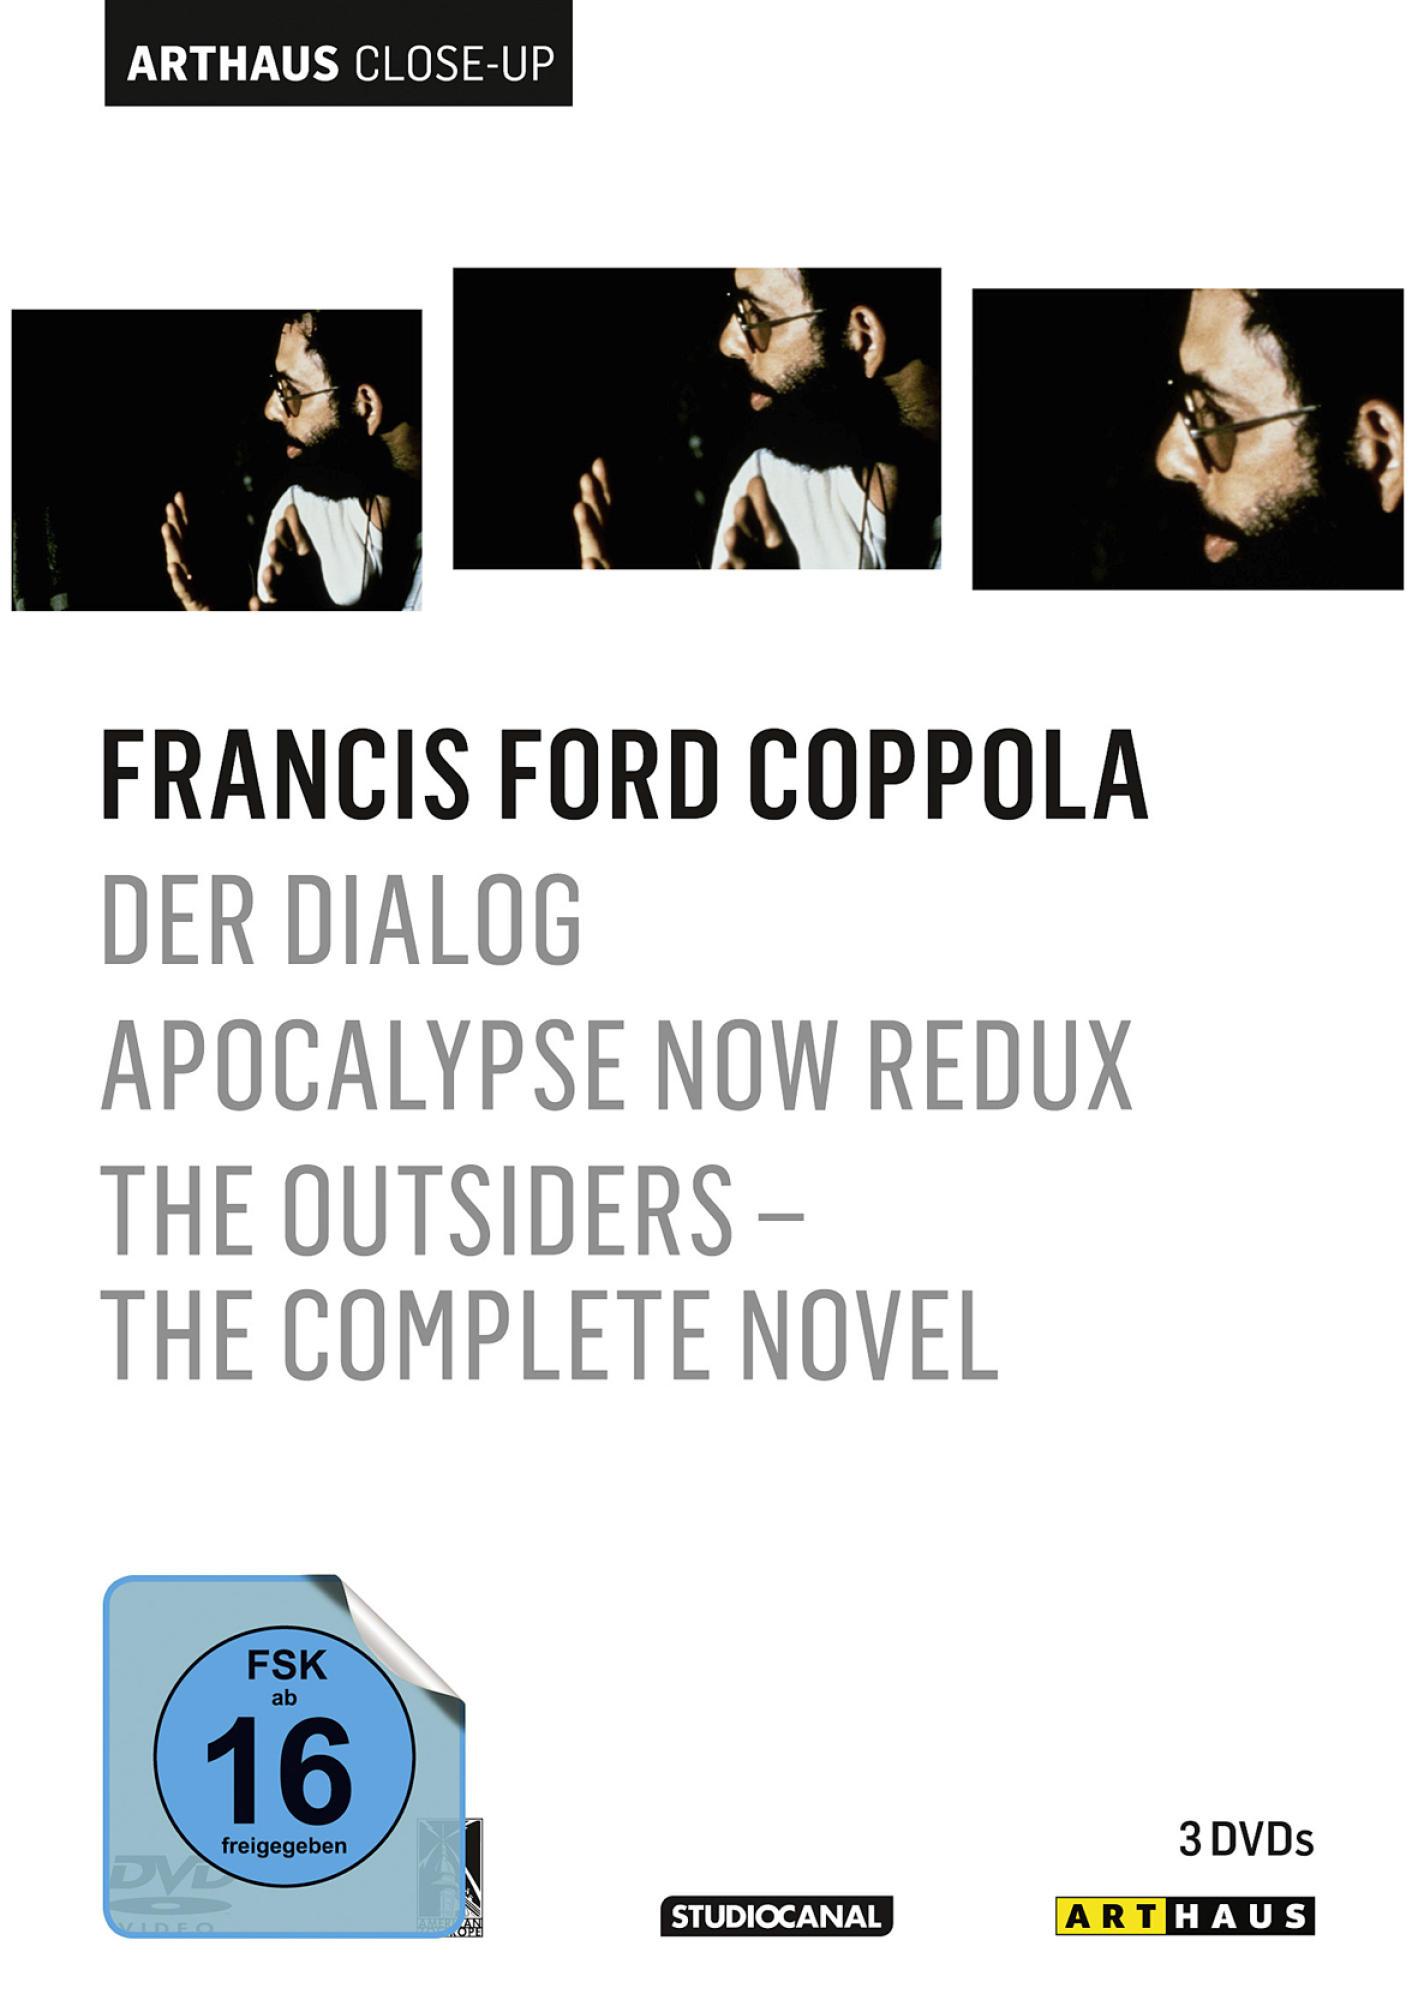 Coppola Close-up) Ford DVD Francis (Arthaus